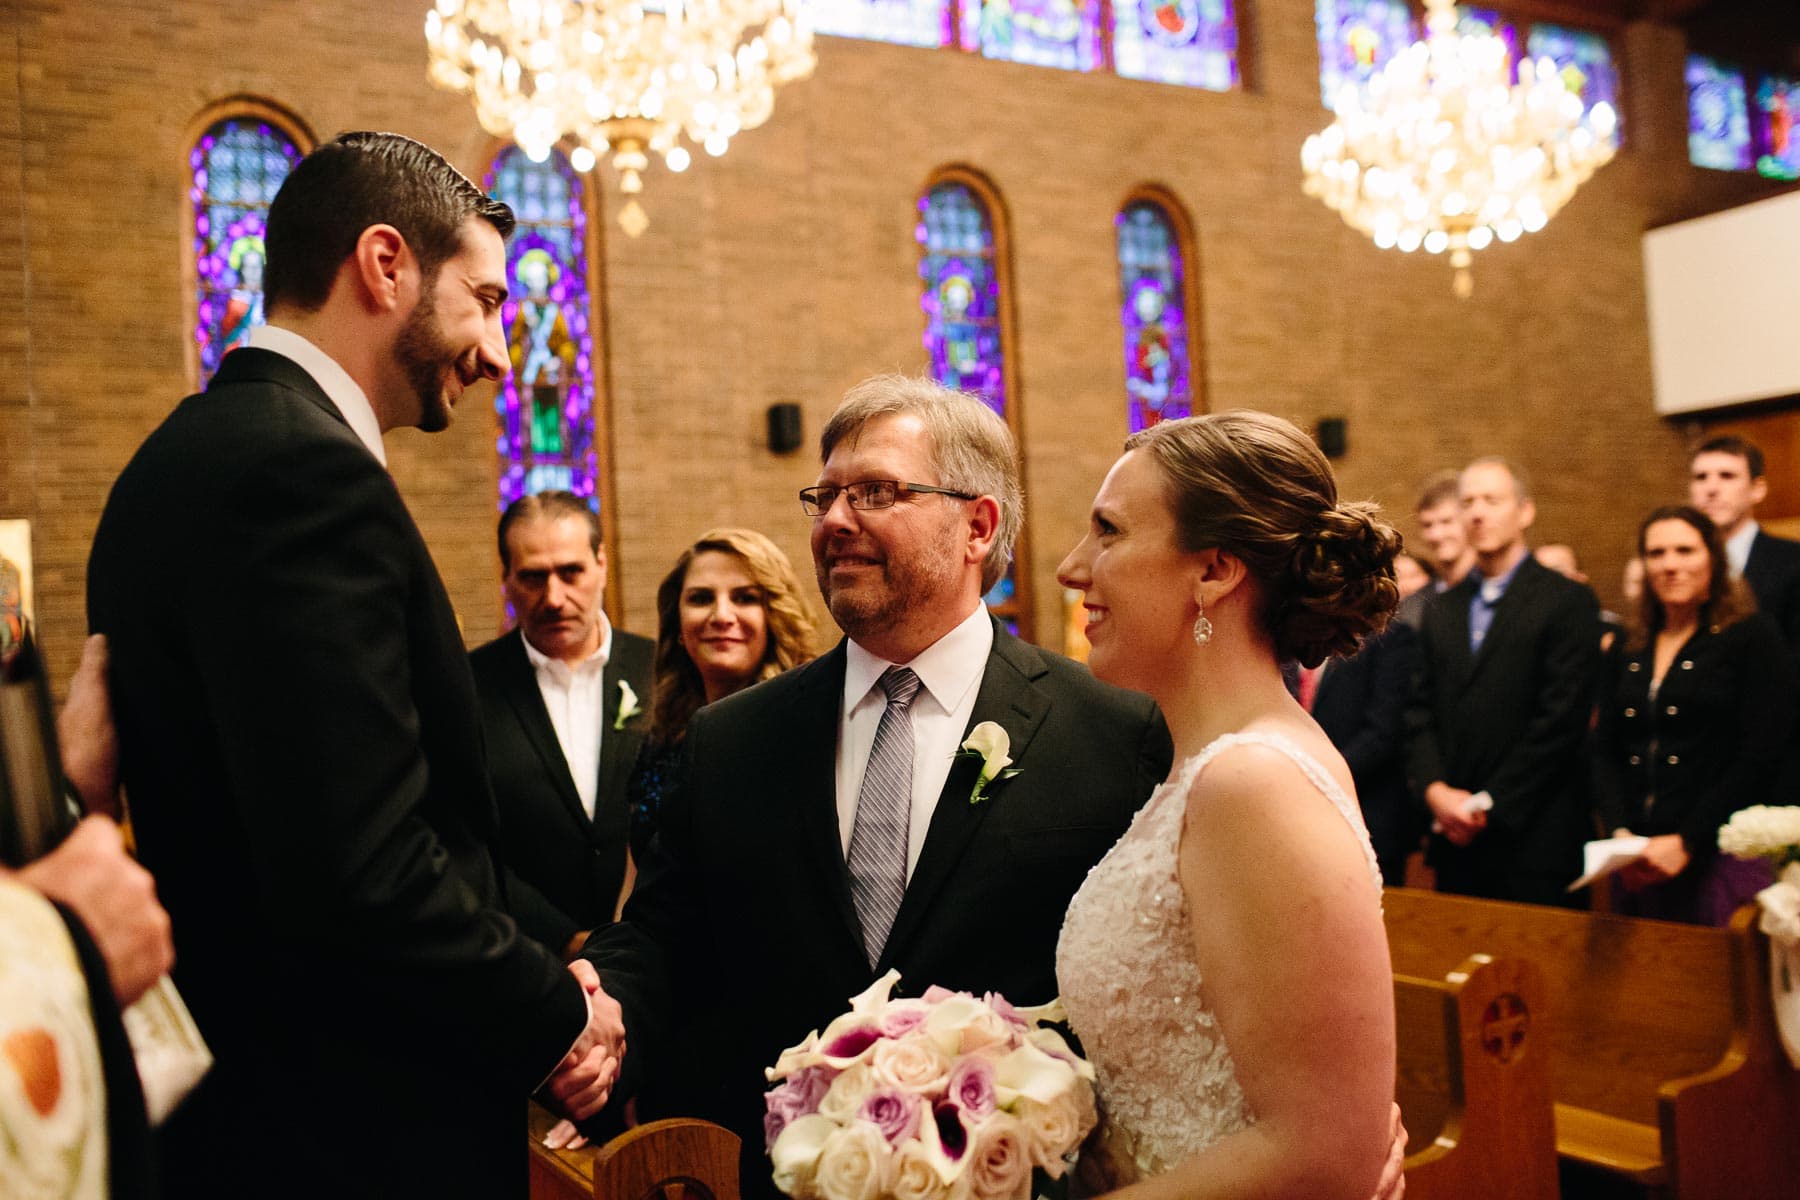 Lauren and George's wedding ceremony | Kelly Benvenuto Photography | Boston wedding photographer